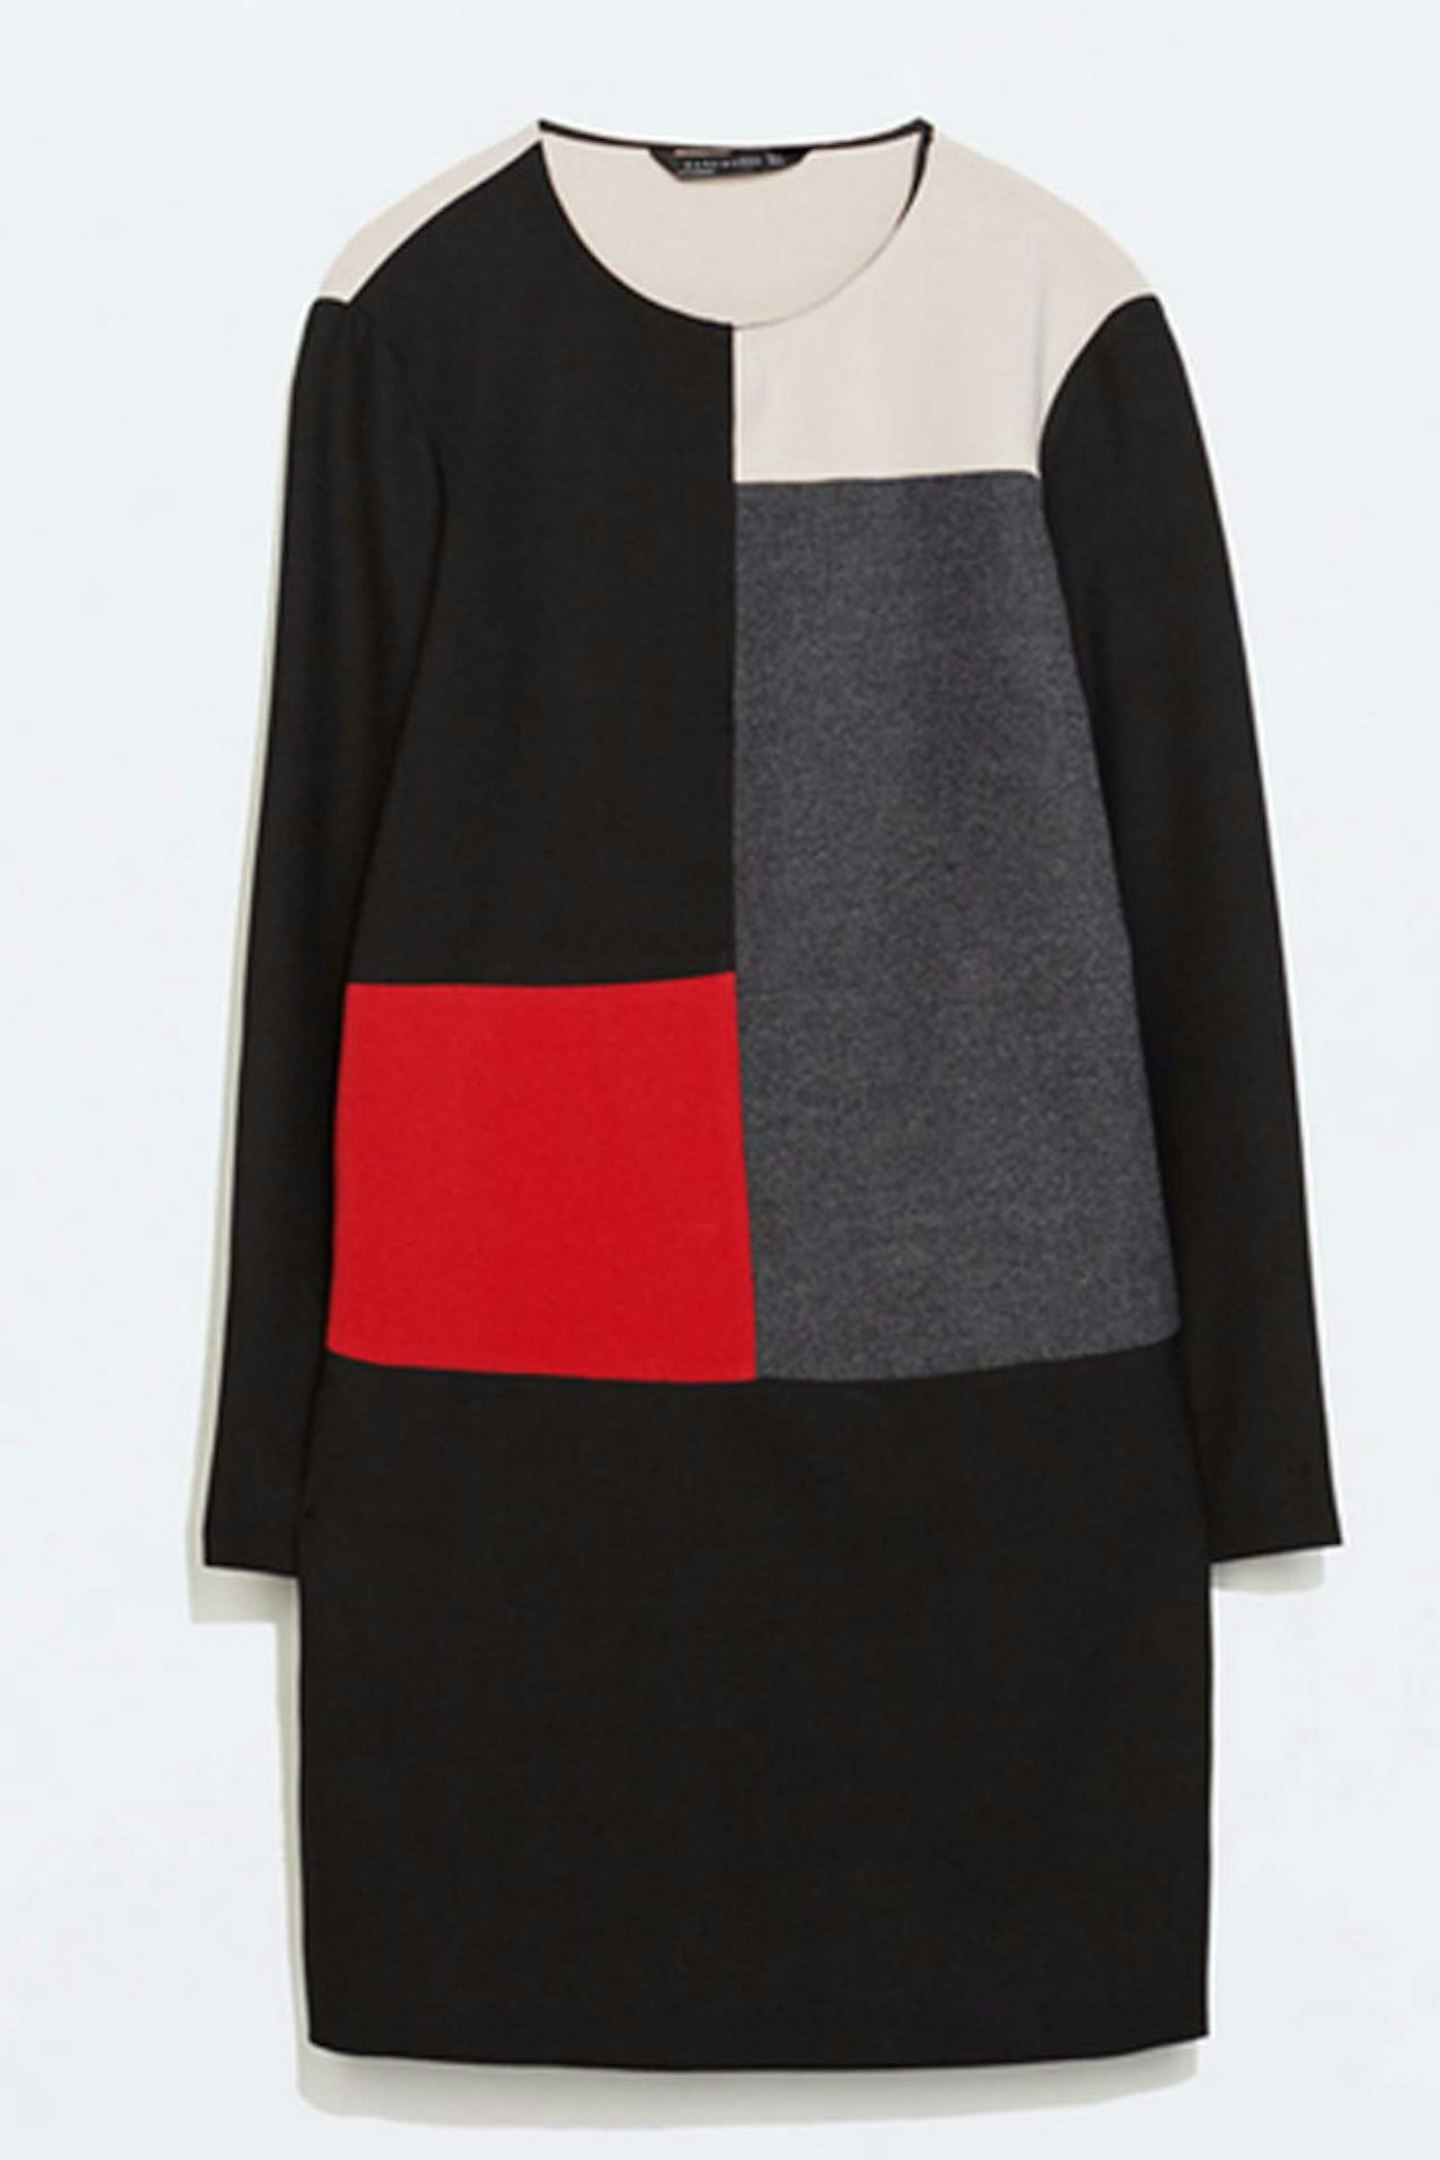 23. Block colour dress, £59.99, Zara